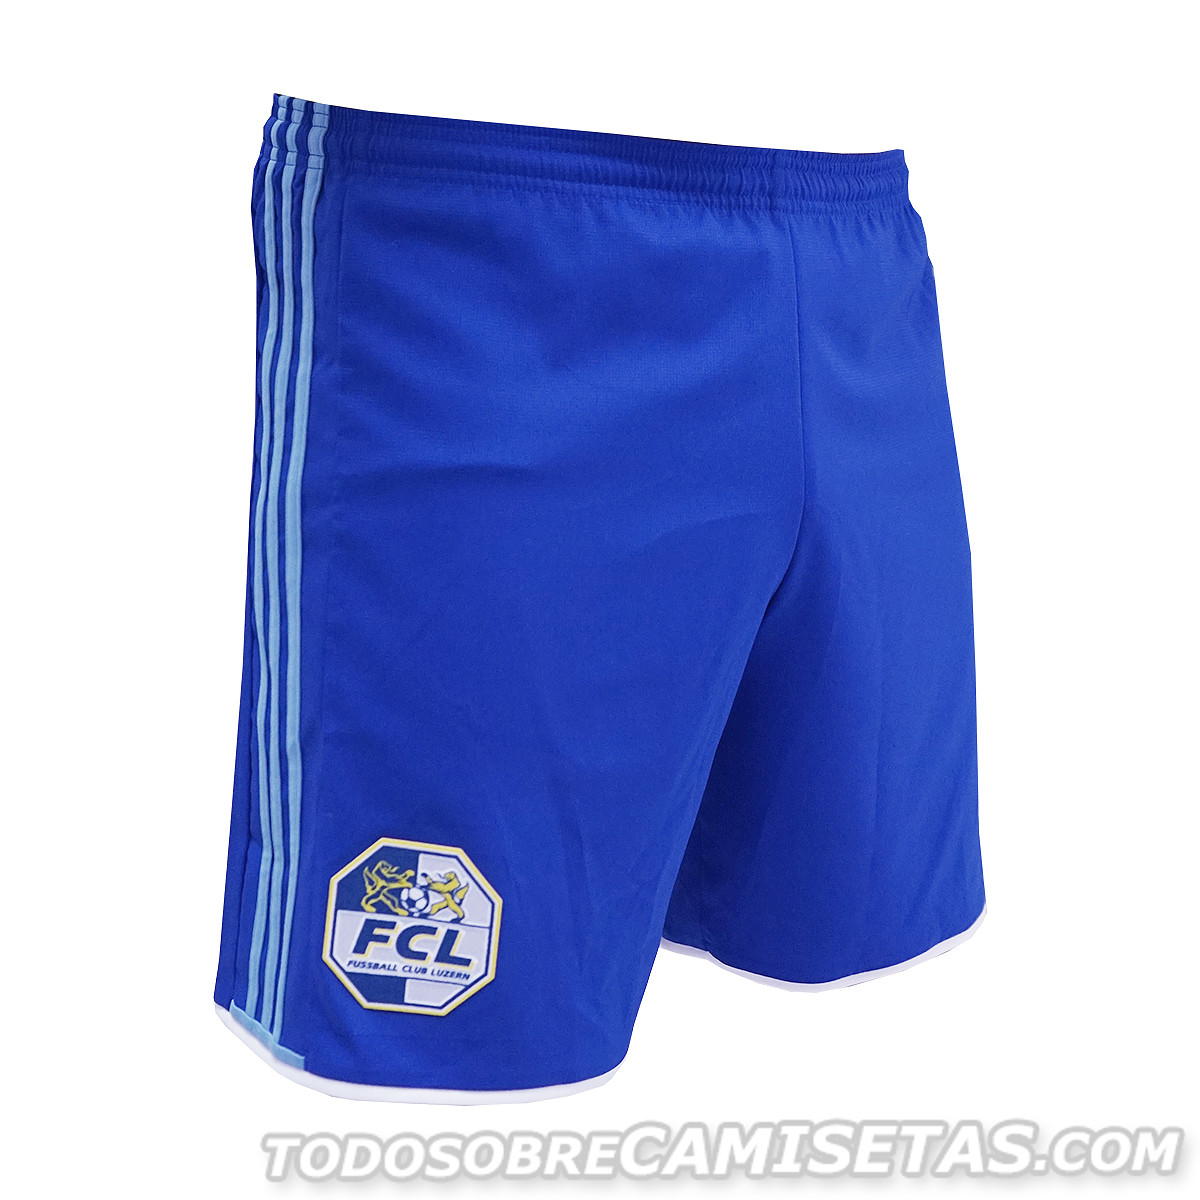 FC Luzern Adidas 2017-18 Kits